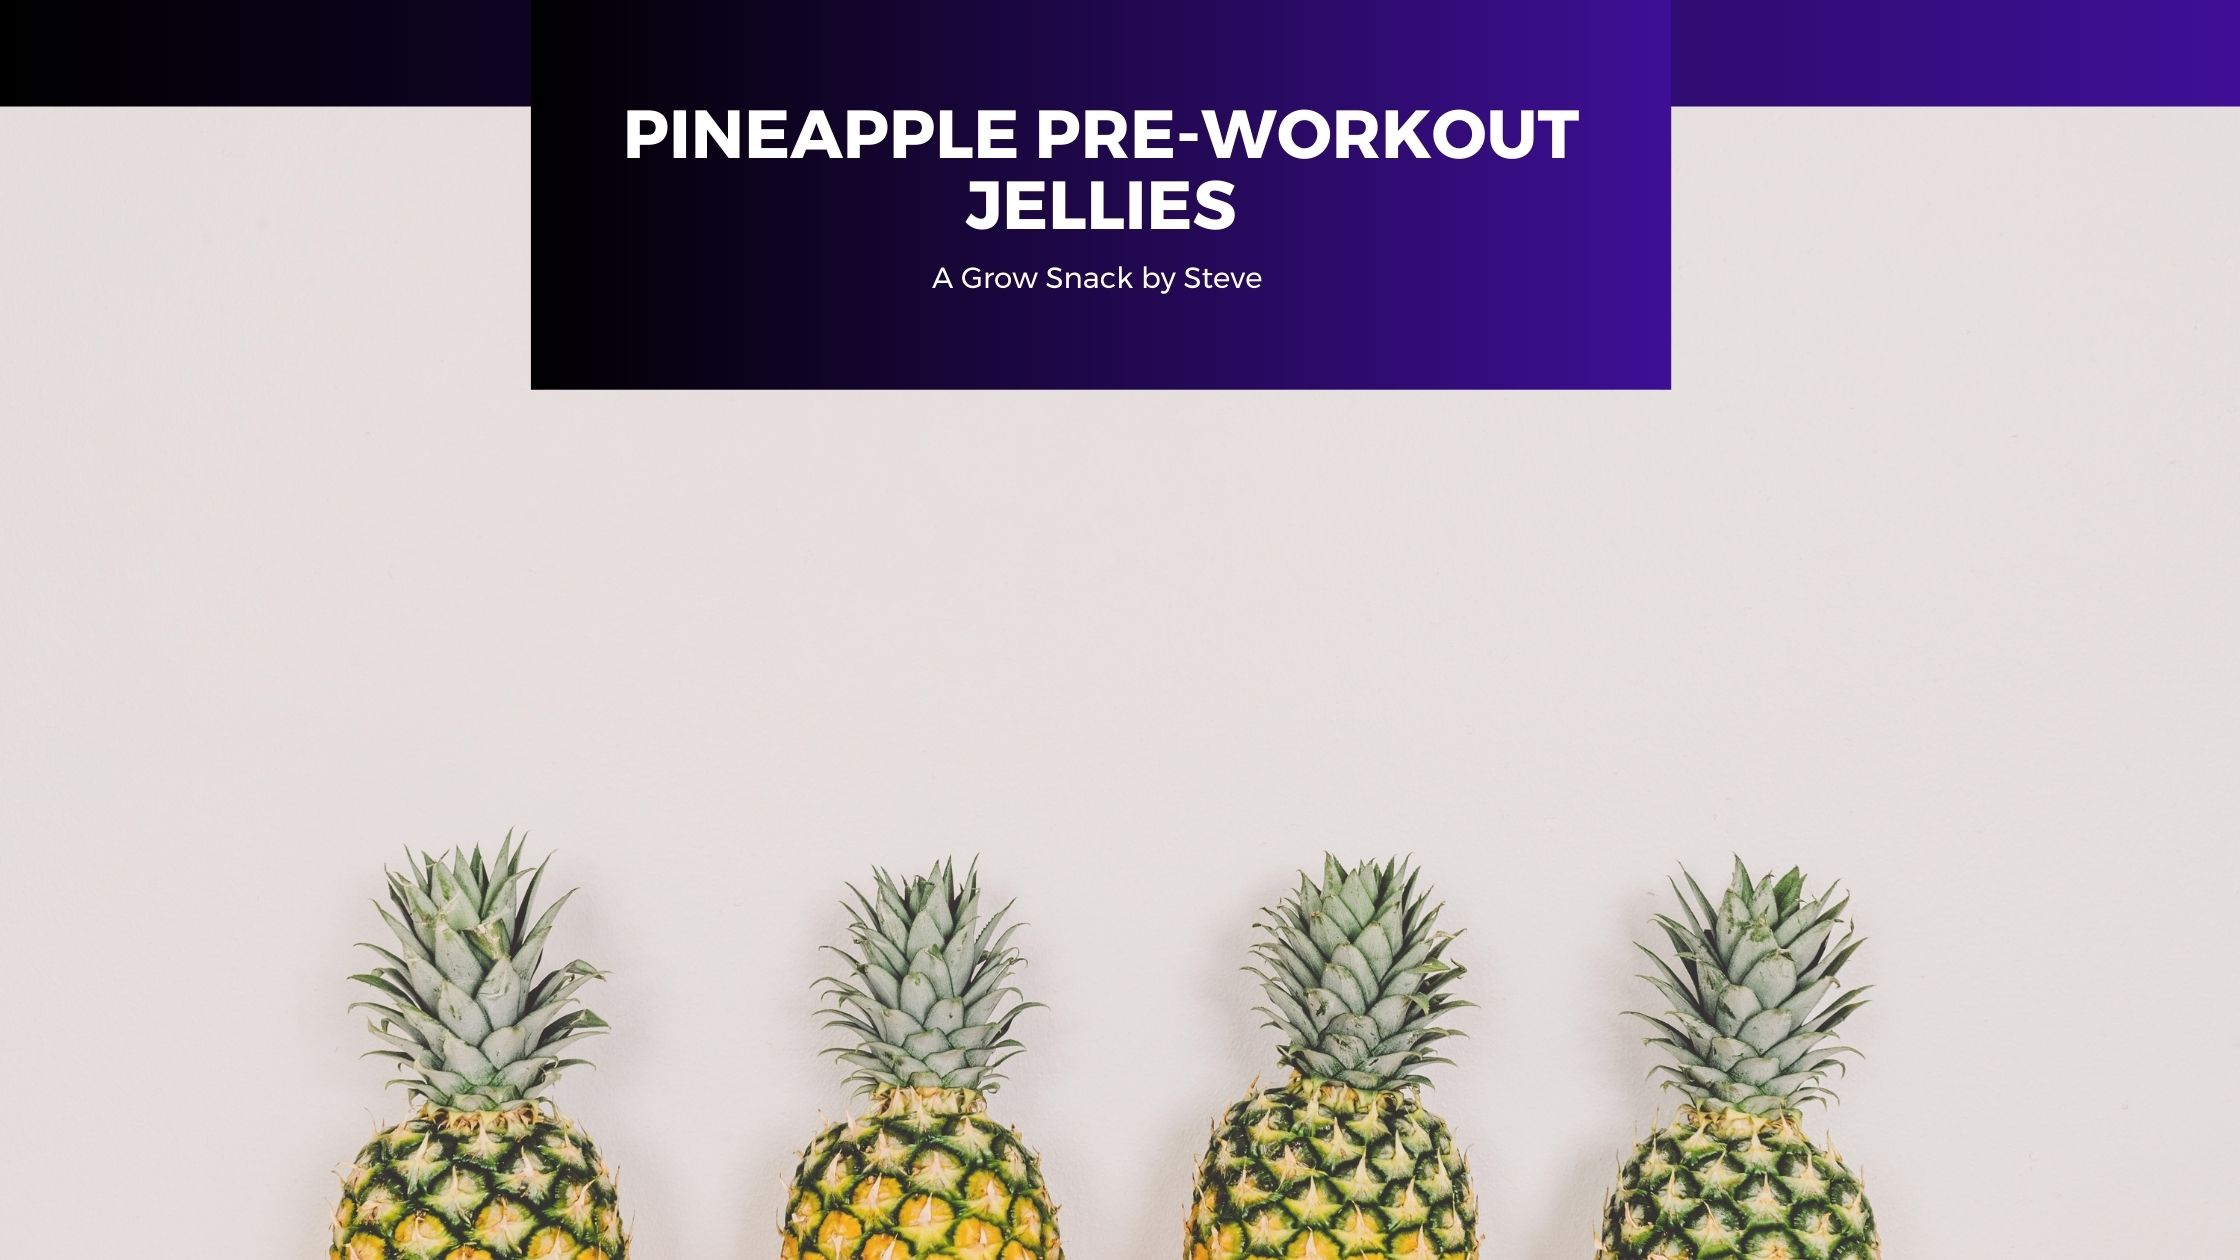 Pineapple Preworkout Jellies